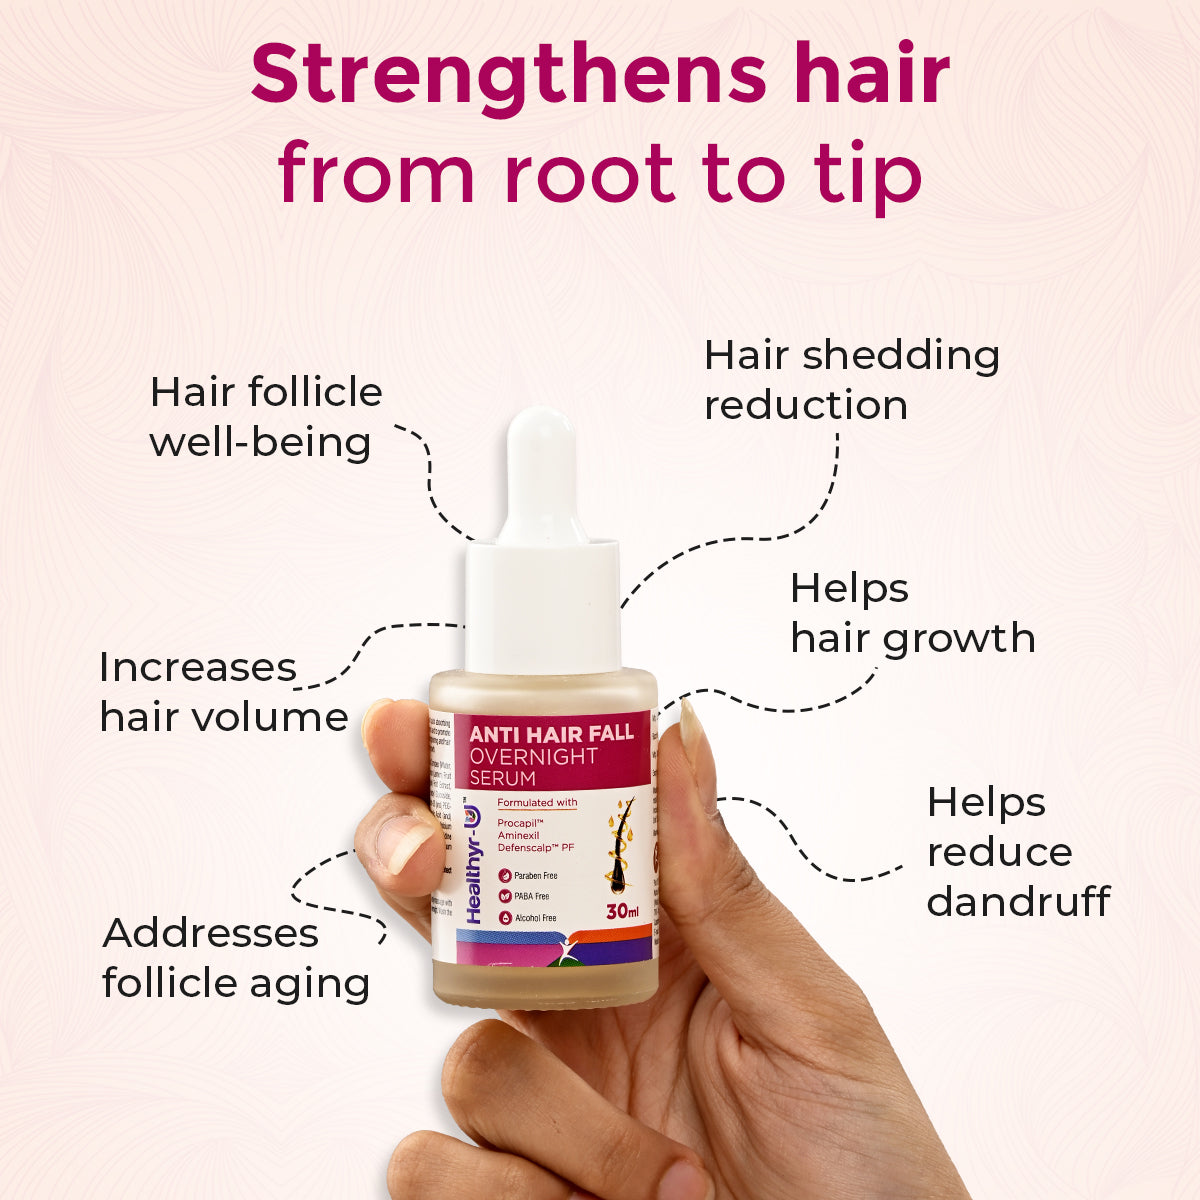 Healthyr-U Anti-Hair Fall Overnight Serum benefits